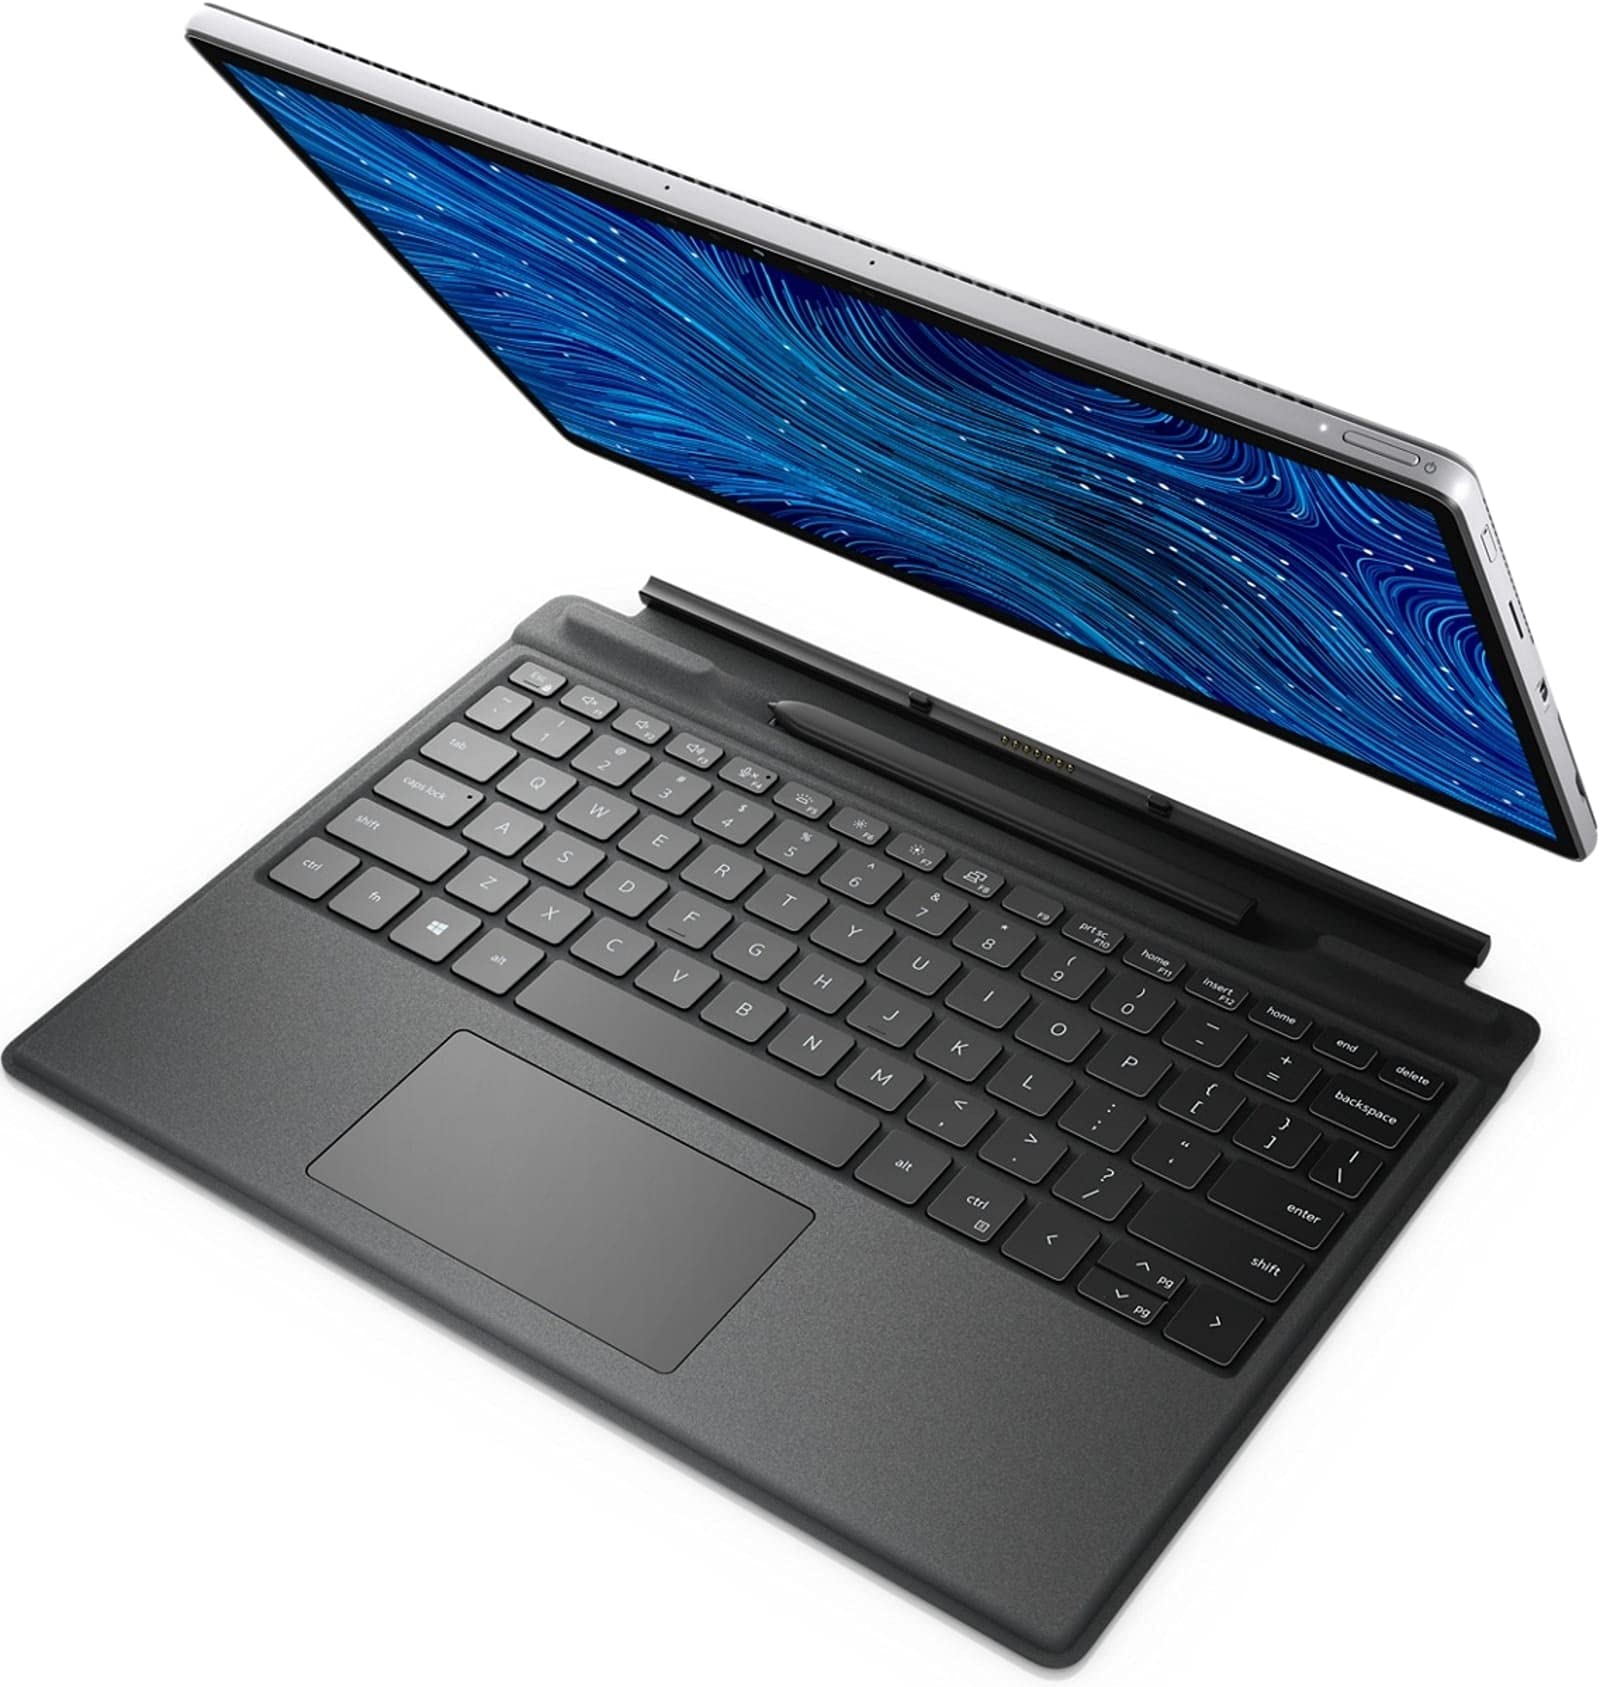 Dell Latitude 7320 Detachable 13.3” Touchscreen Laptop – Core i5-1140G7 (4.2GHz), Intel Iris Graphics, 16GB DDR4, 1TB SSD, Fingerprint Reader, WIFI 6 & BT 5.1, vPro, Win 10 Pro, Backlit Keys